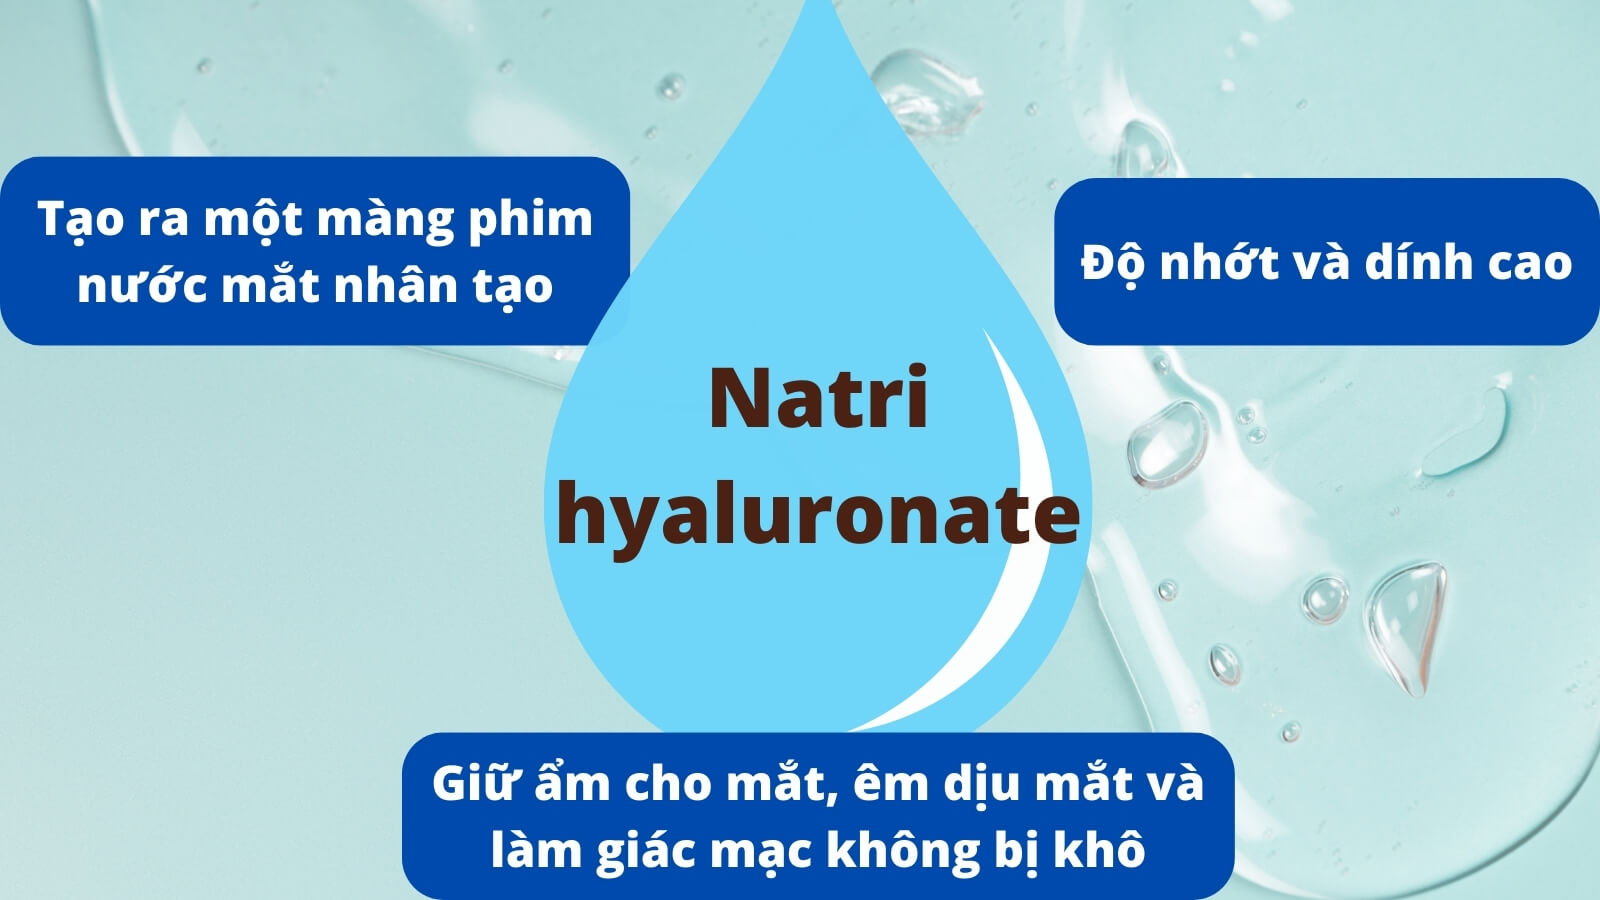 Natri hyaluronate giúp giữ ẩm mắt